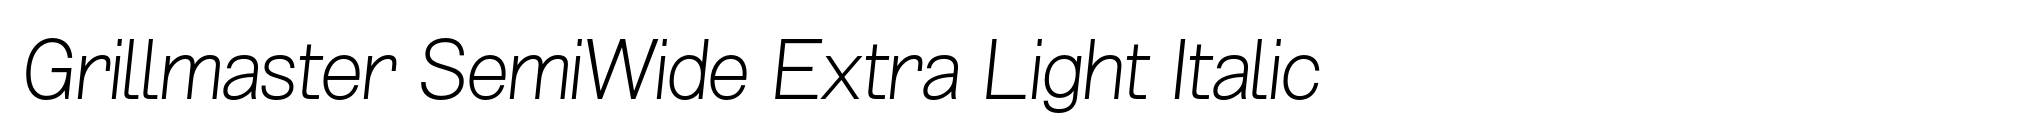 Grillmaster SemiWide Extra Light Italic image